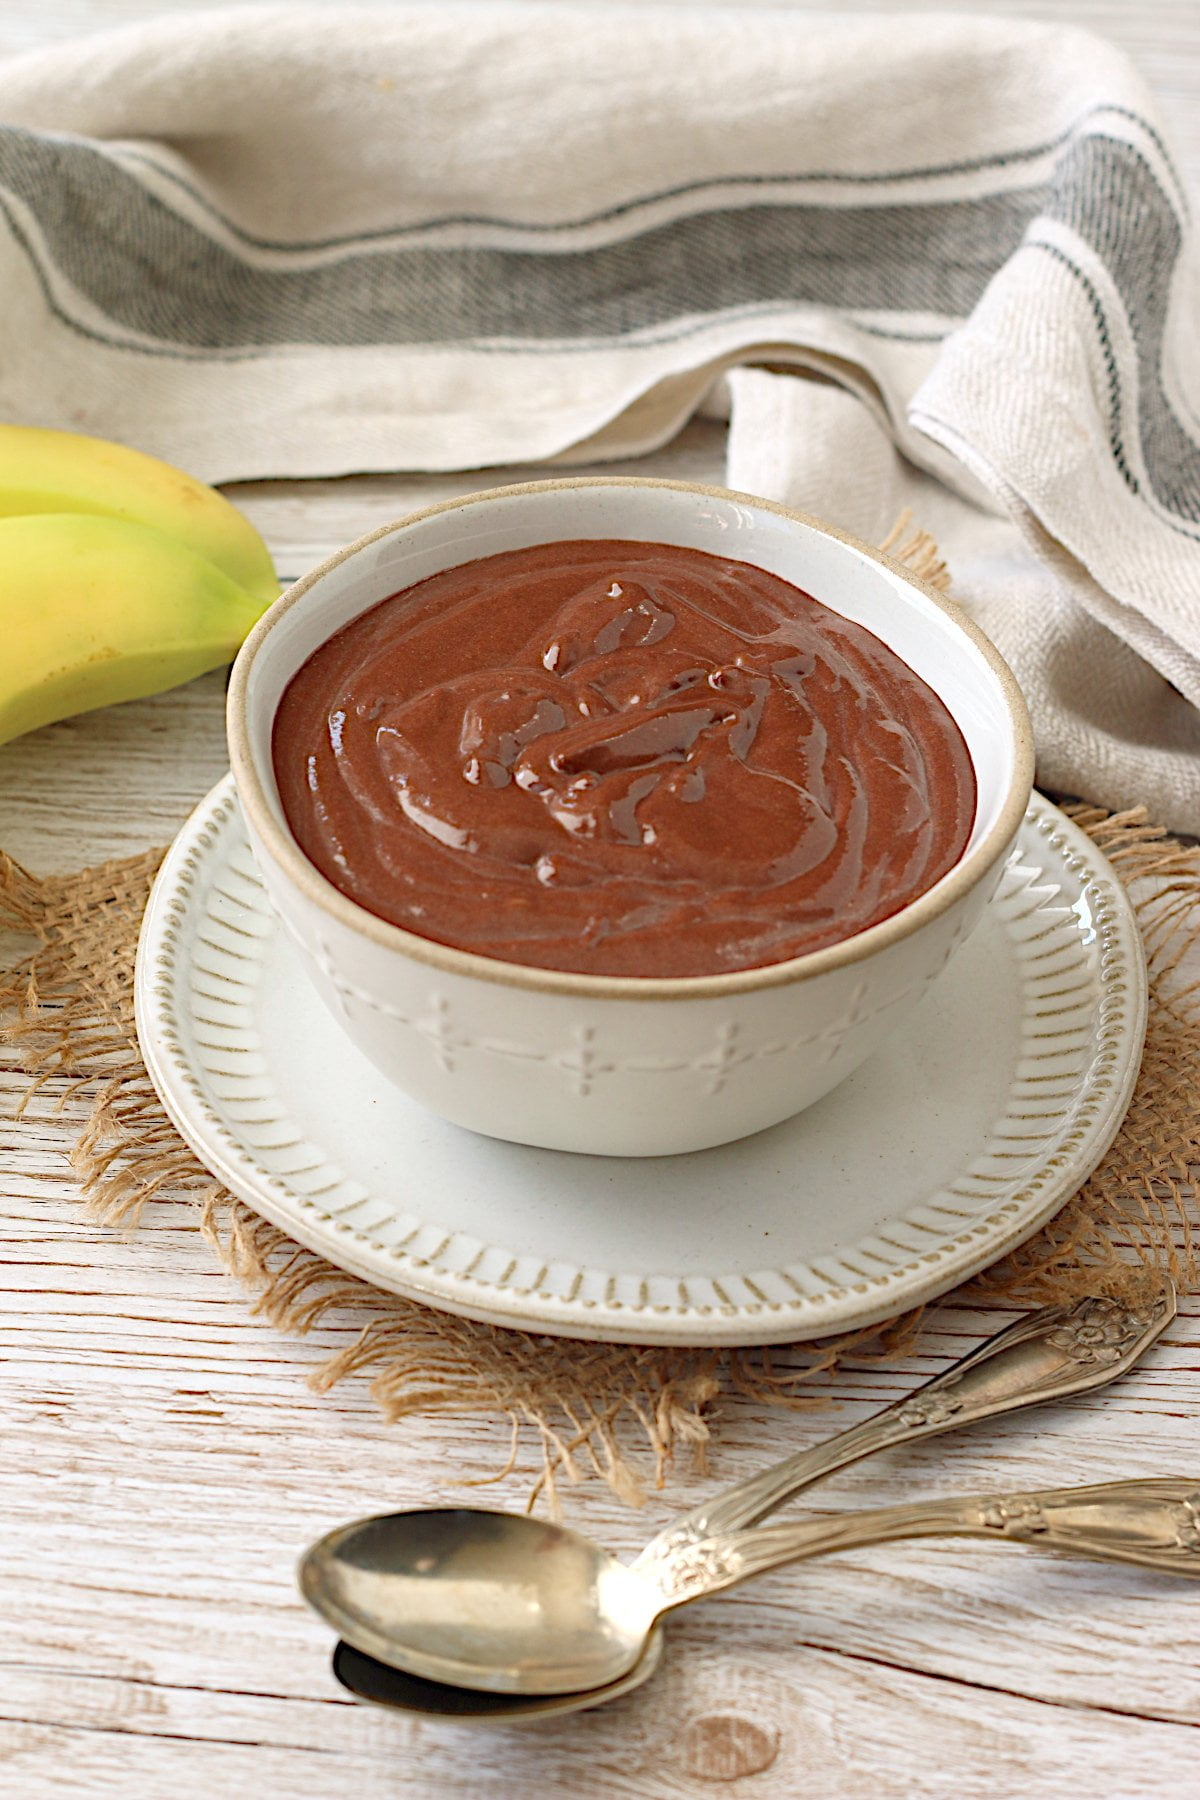 Homemade vegan chocolate banana pudding in a white bowl.